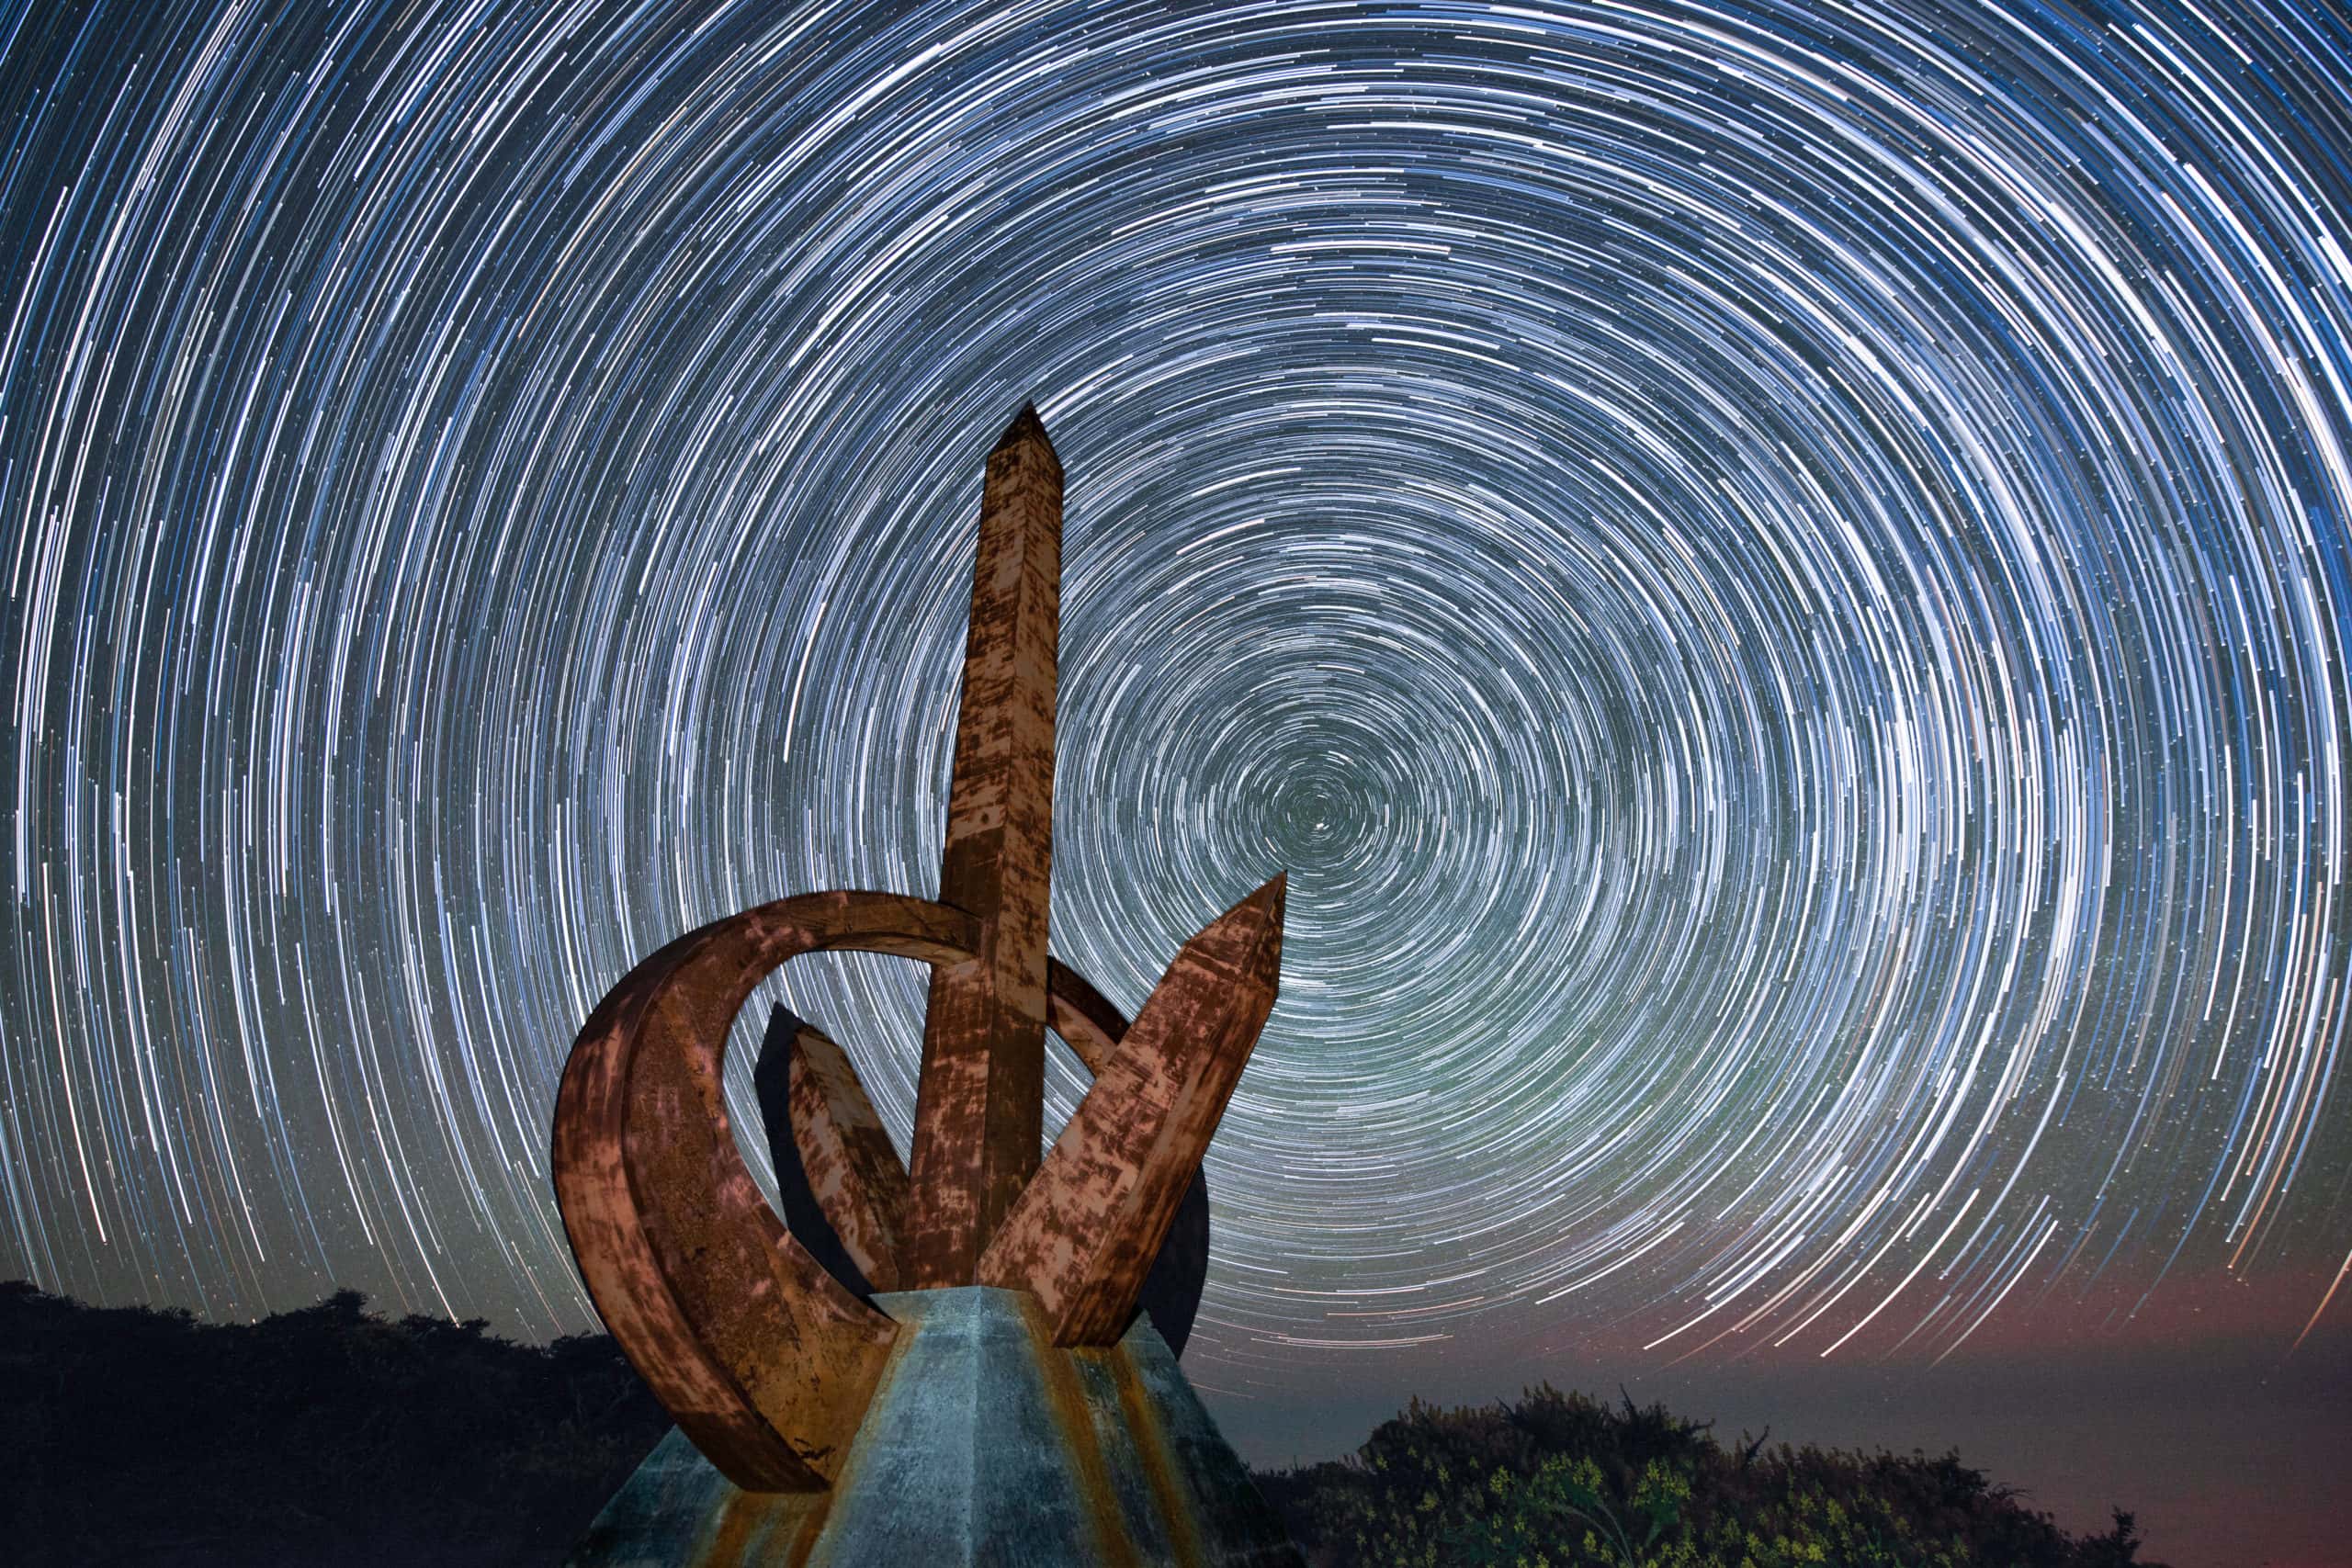 Infinity monument, La Palma, star trails